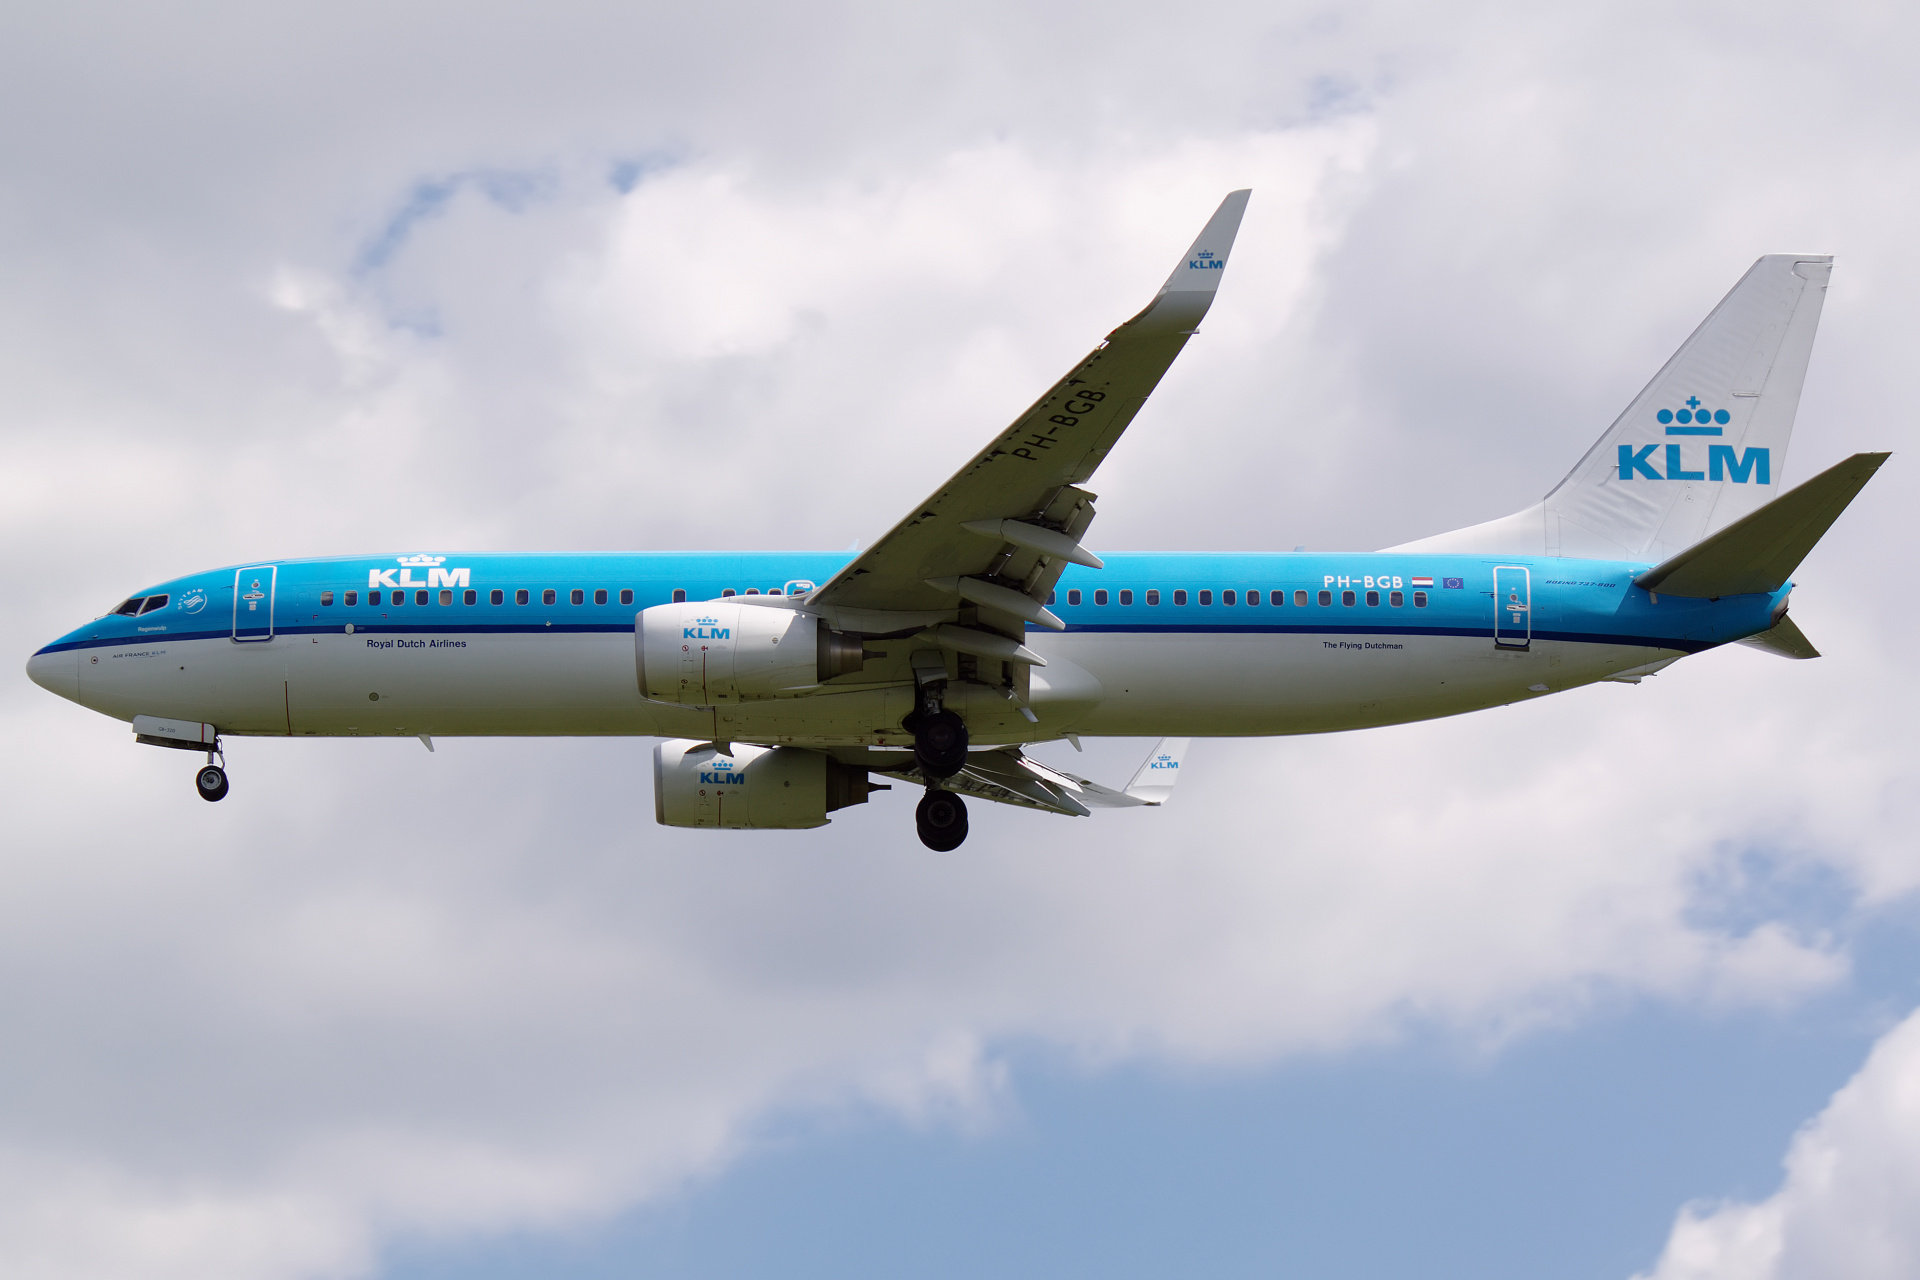 PH-BGB (Aircraft » EPWA Spotting » Boeing 737-800 » KLM Royal Dutch Airlines)